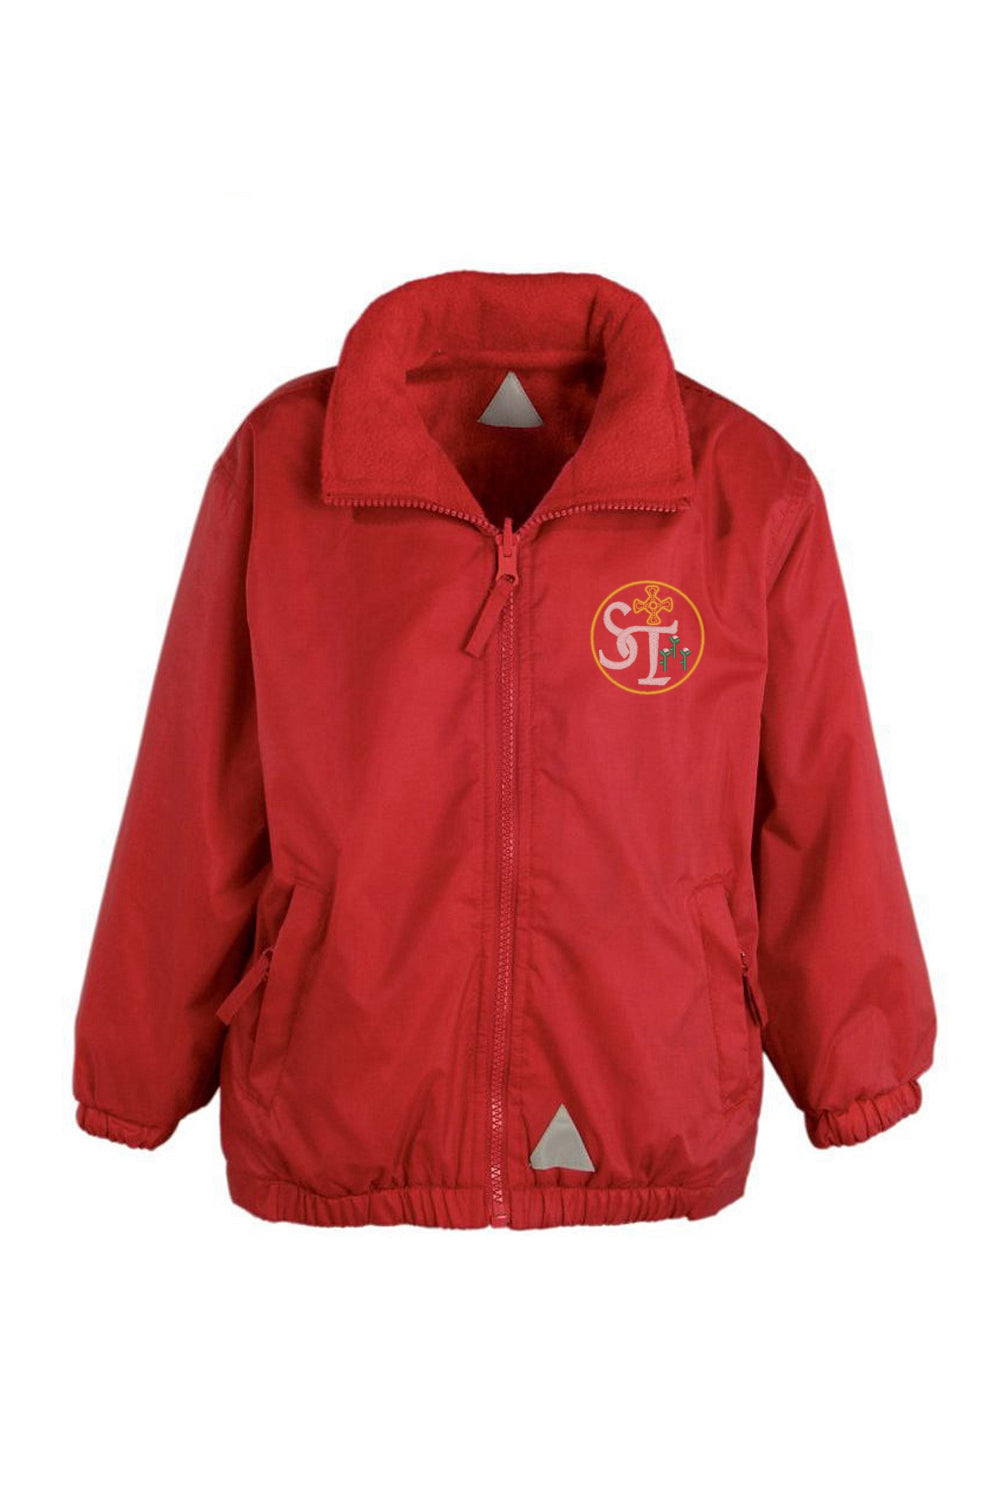 St. Teresa Red Shower Jacket